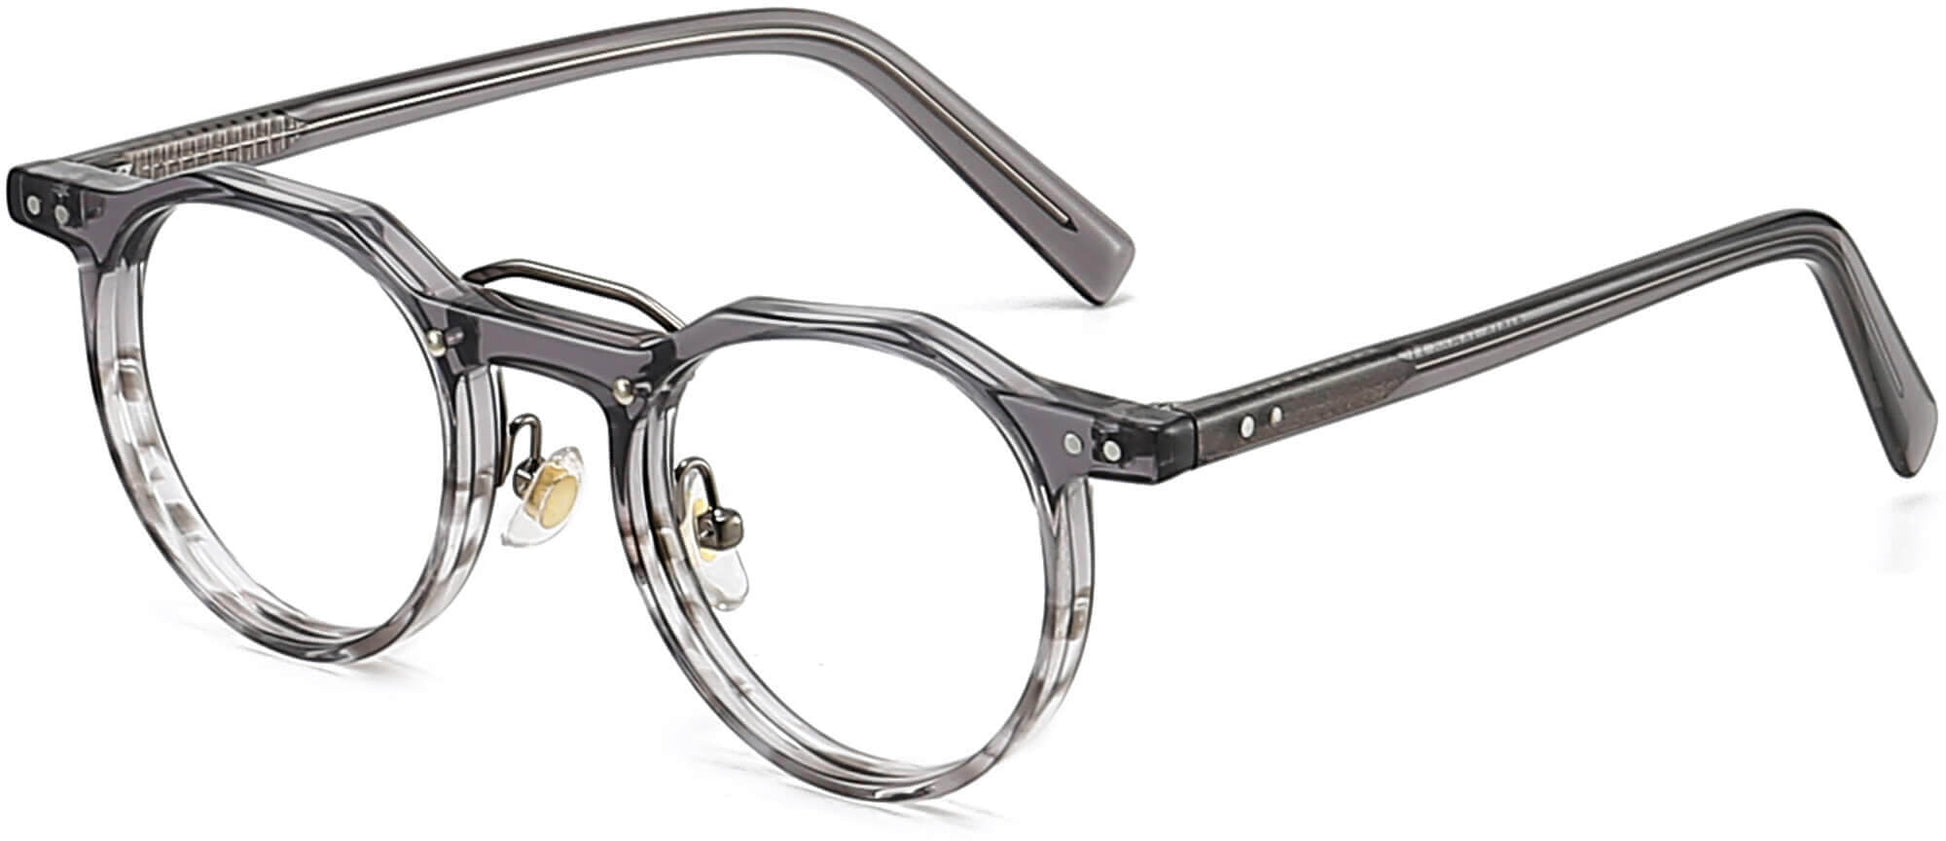 Jaiden Geometric Gray Eyeglasses from ANRRI, angle view